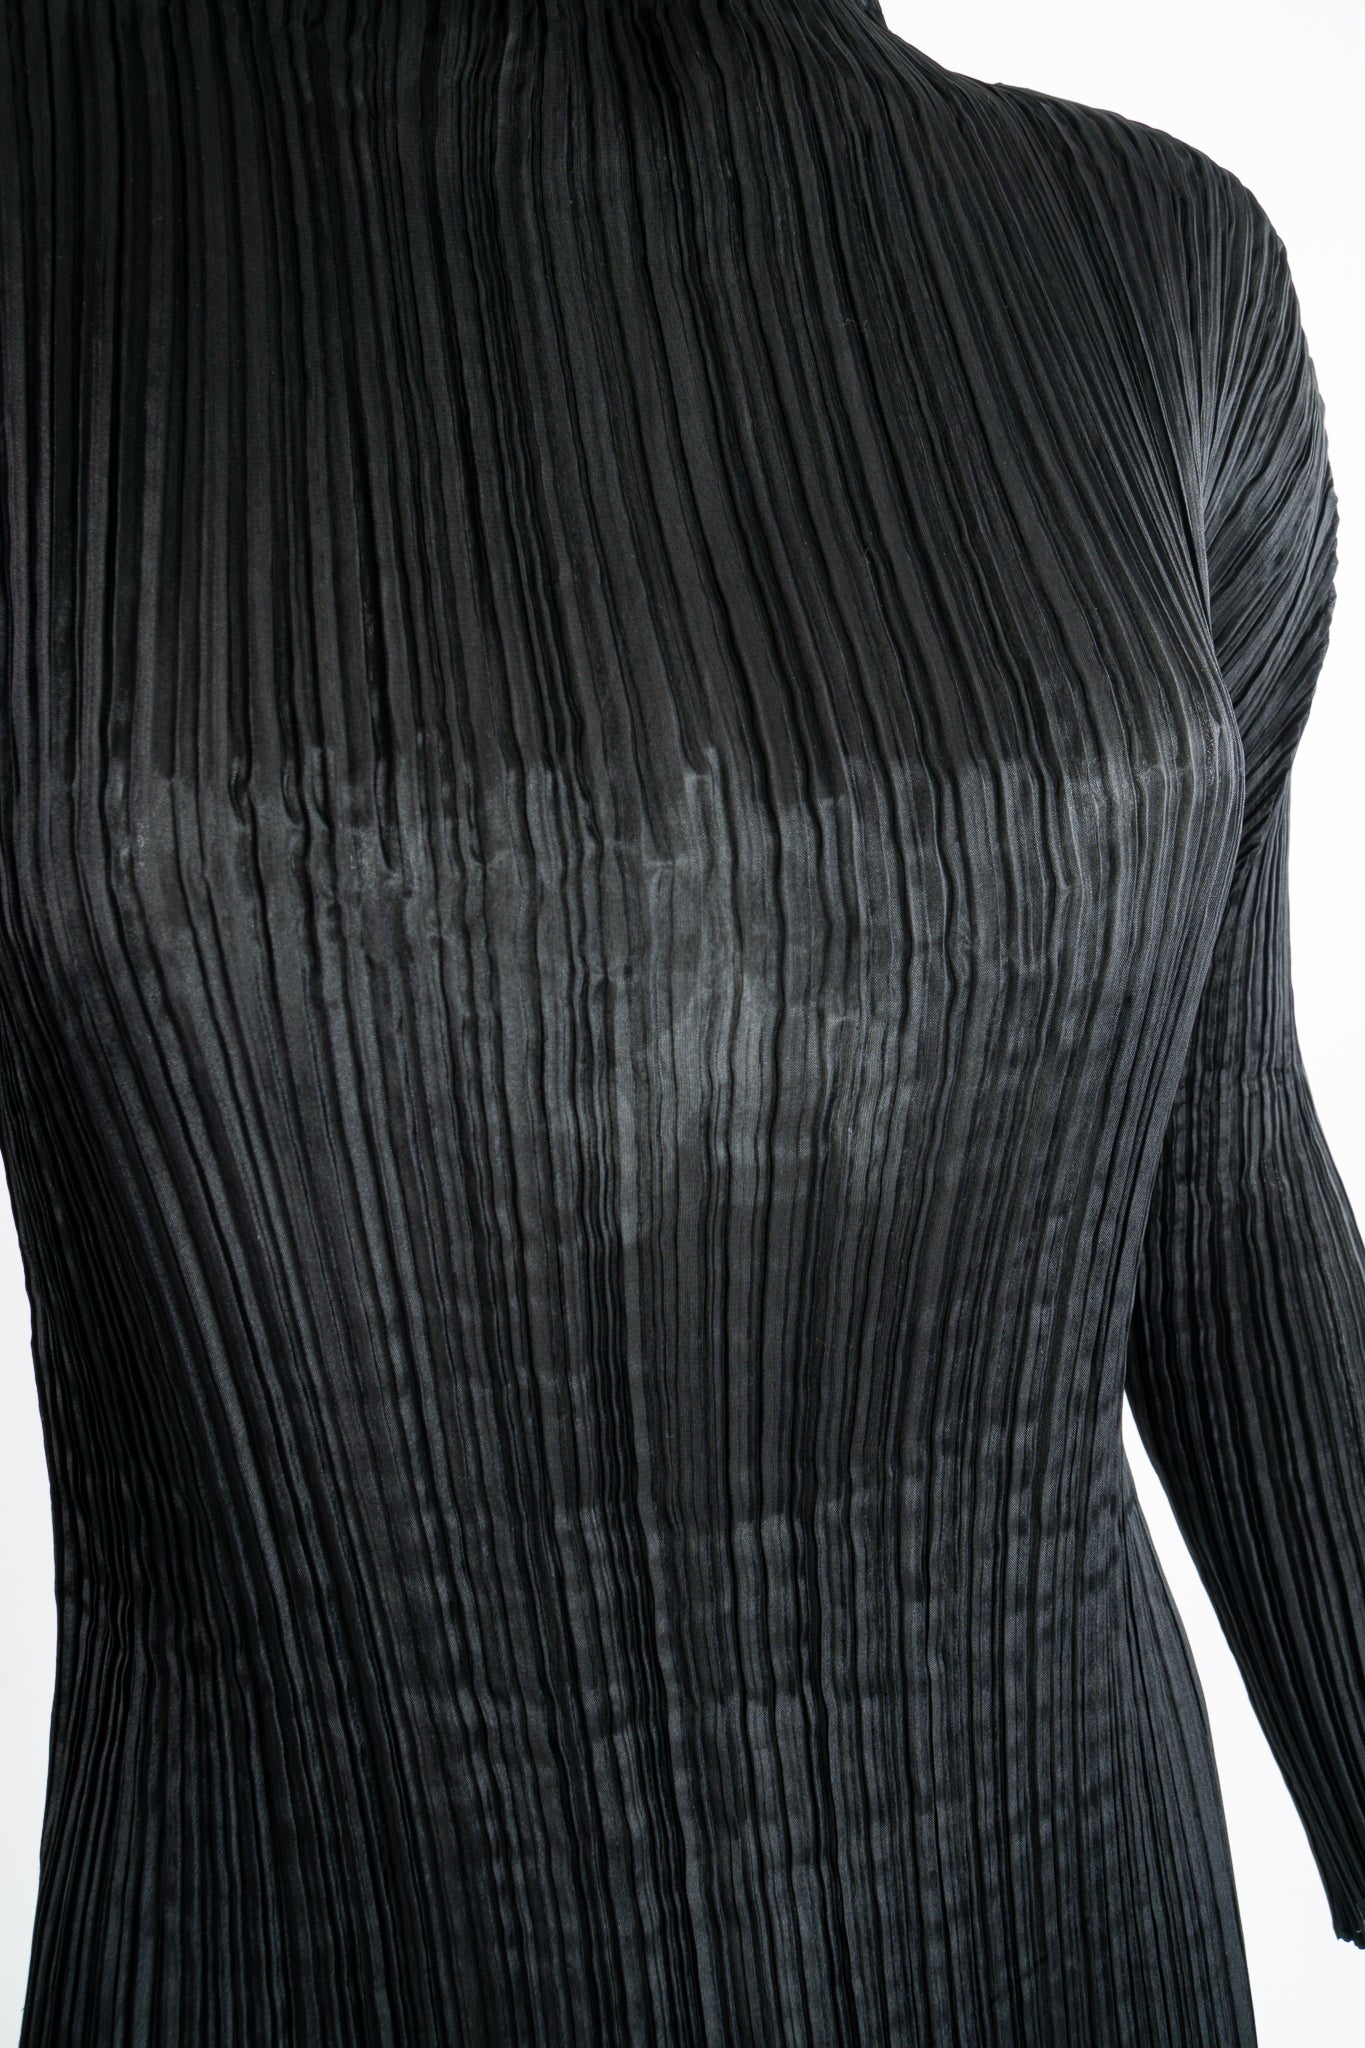 Vintage Issey Miyake Pleats Please Sheer Pleated Mockneck Top on Mannequin fabric at Recess LA